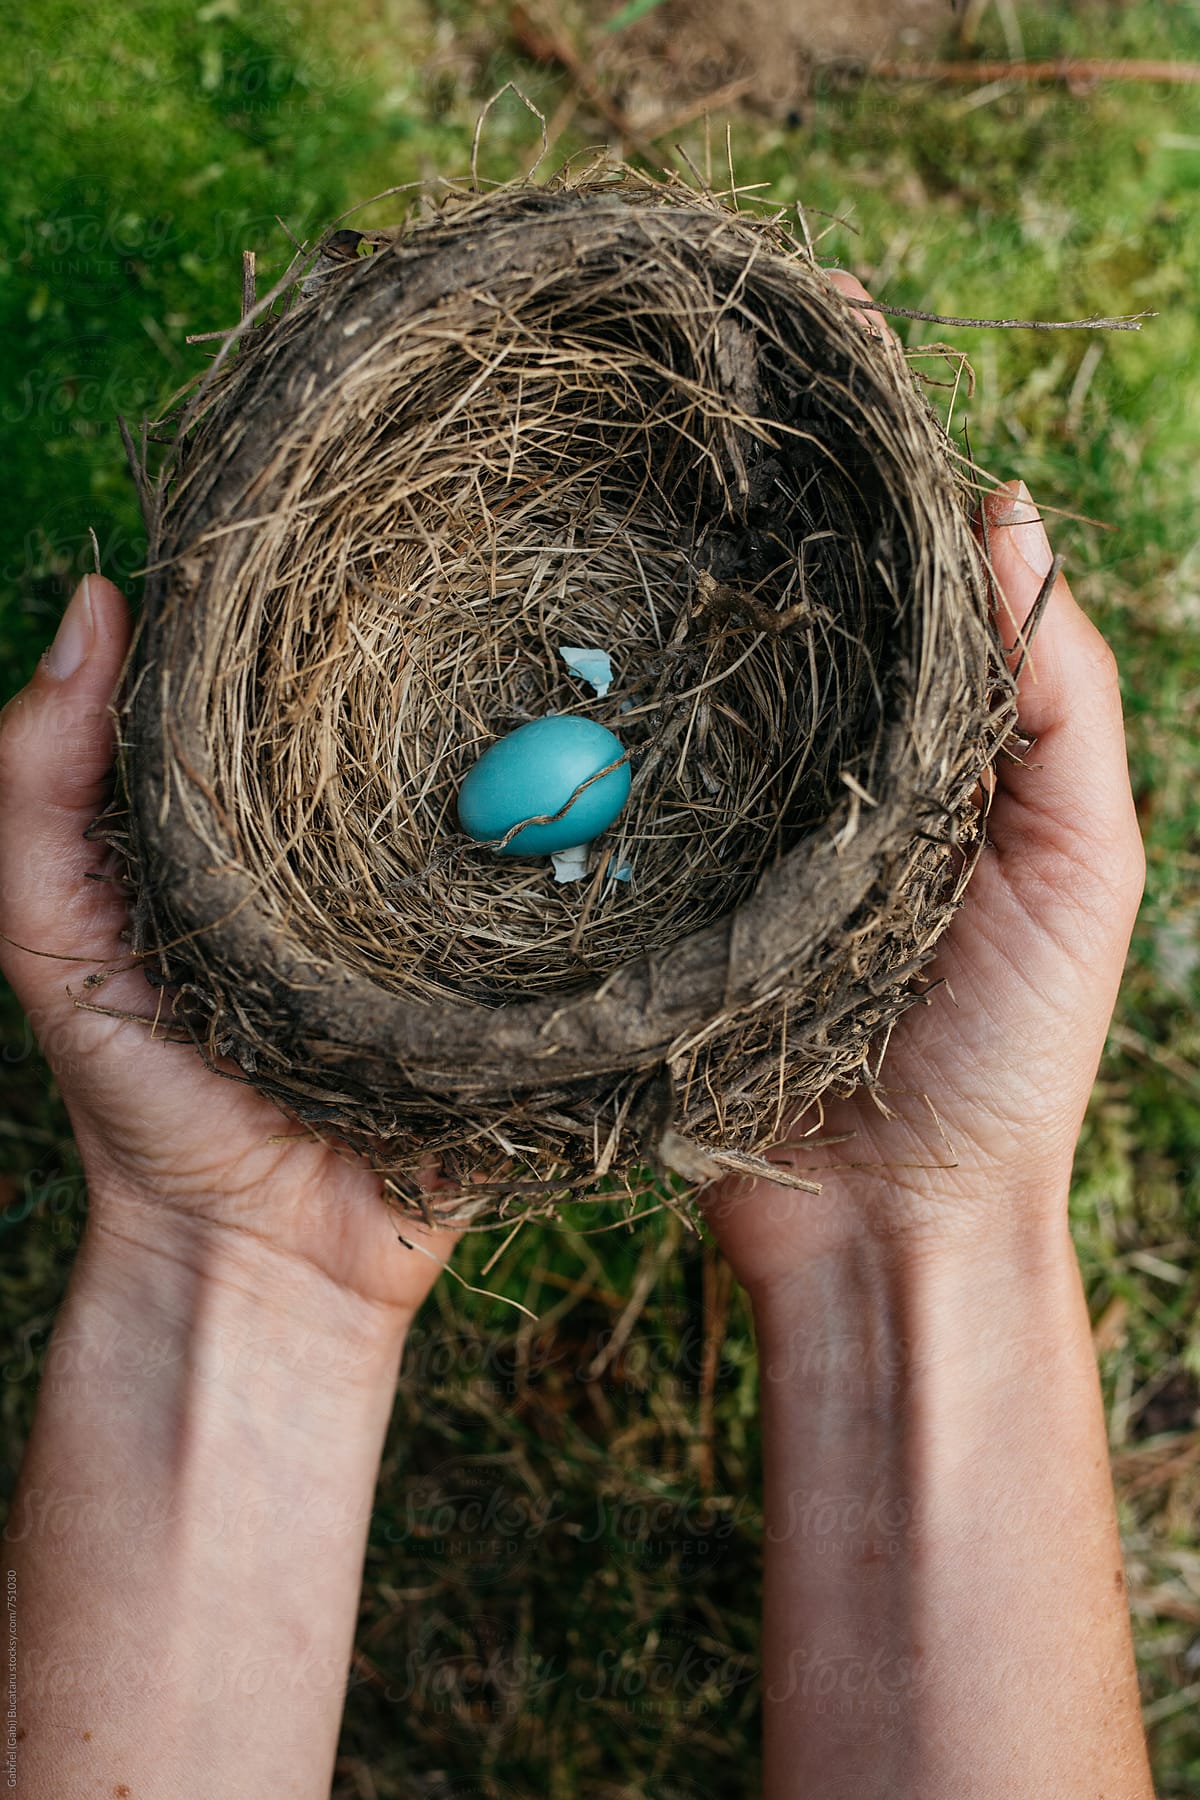 Single robin egg in a nest